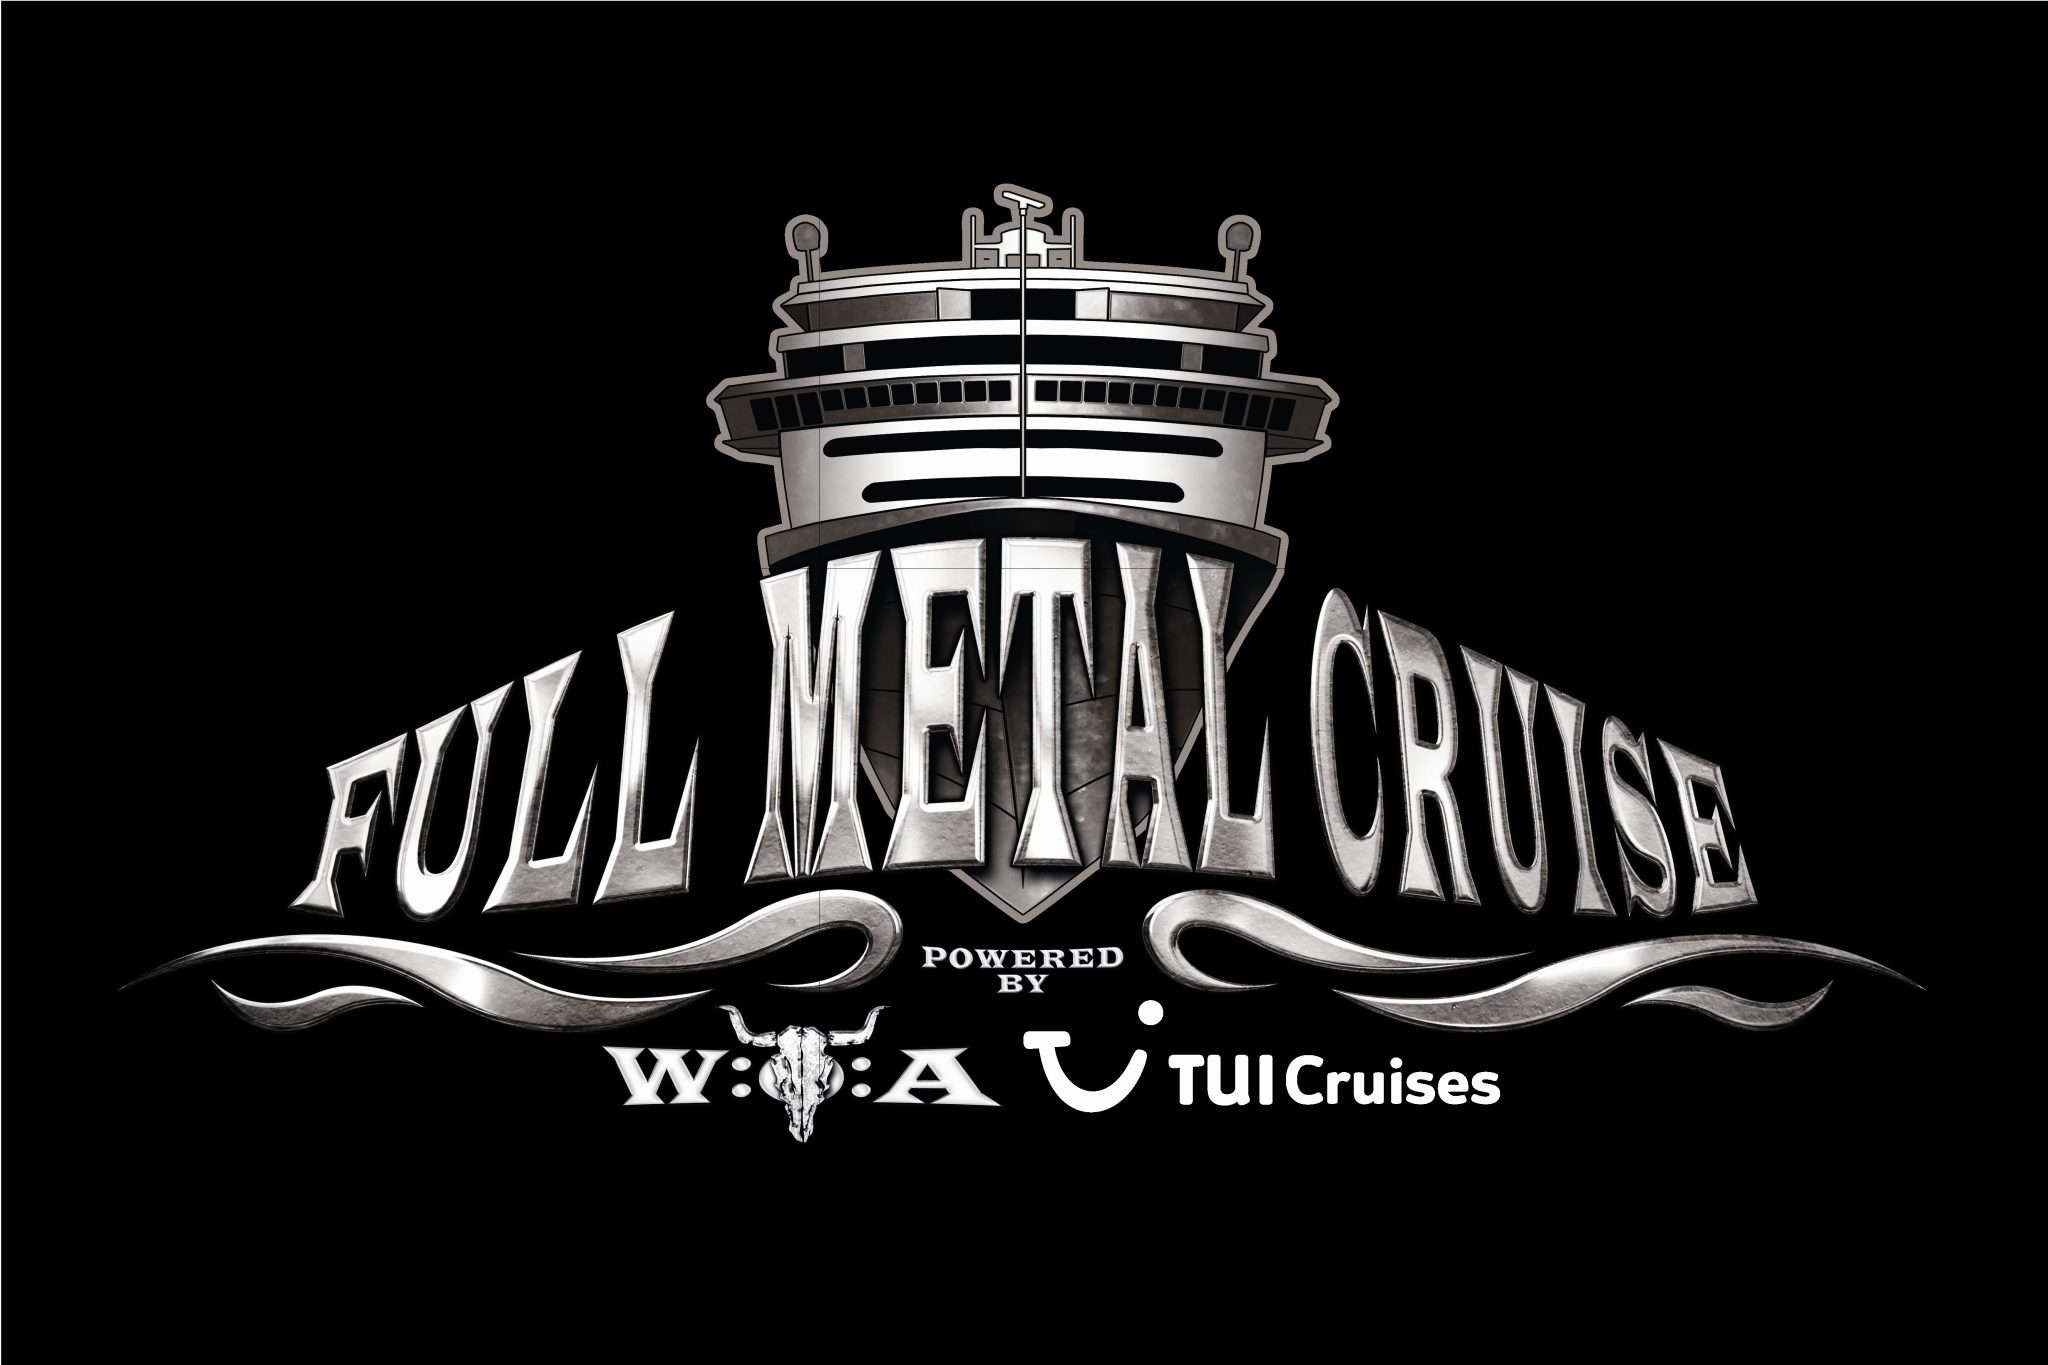 Full Metal Cruise IX – ab sofort buchbar